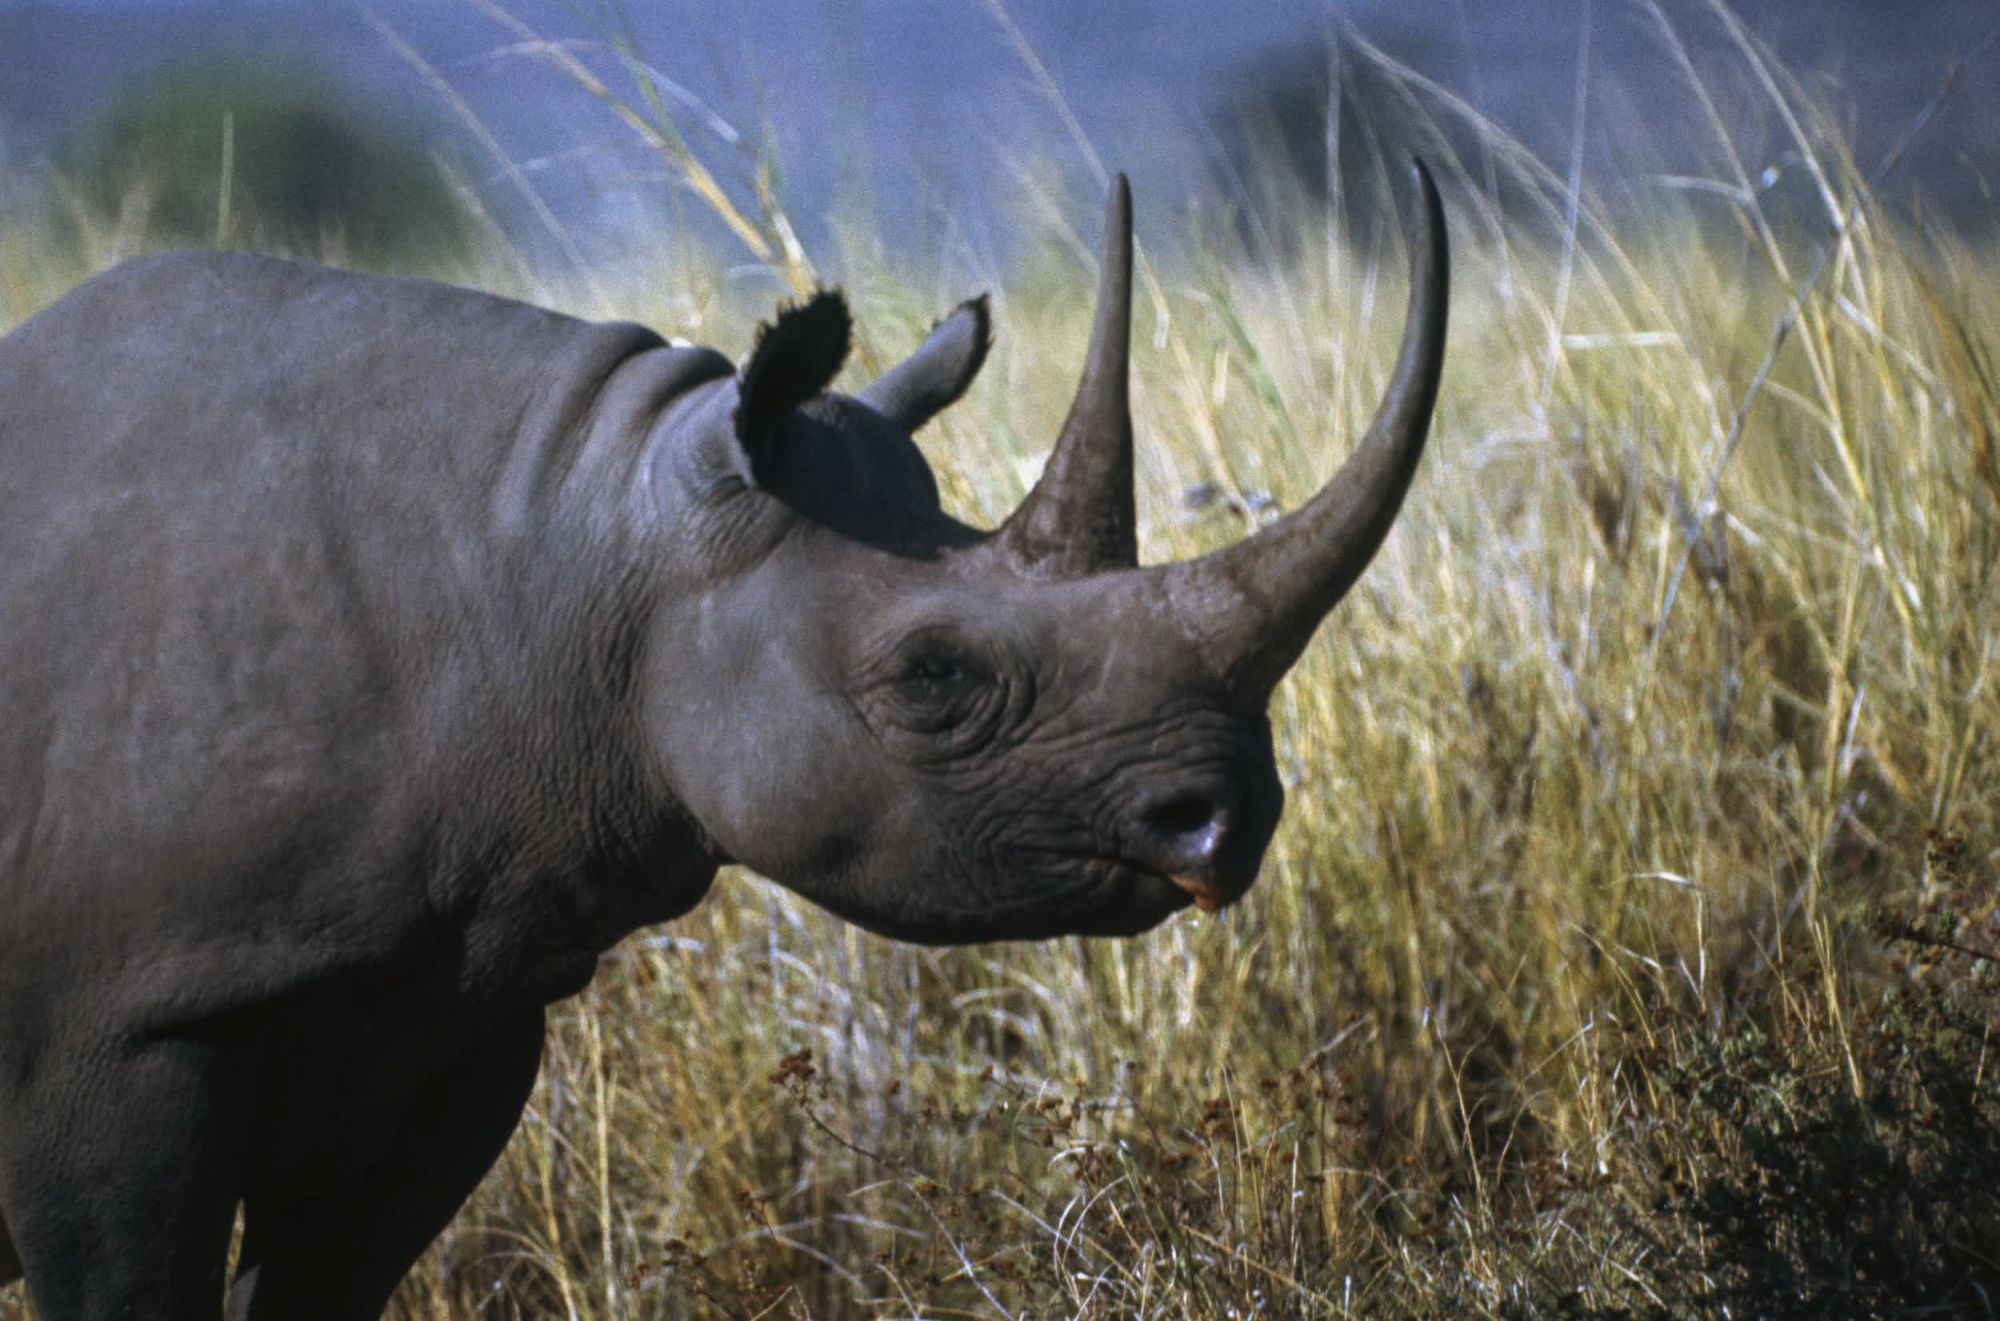 Baby Rhino Rescue - Saving Rhinos from extinction